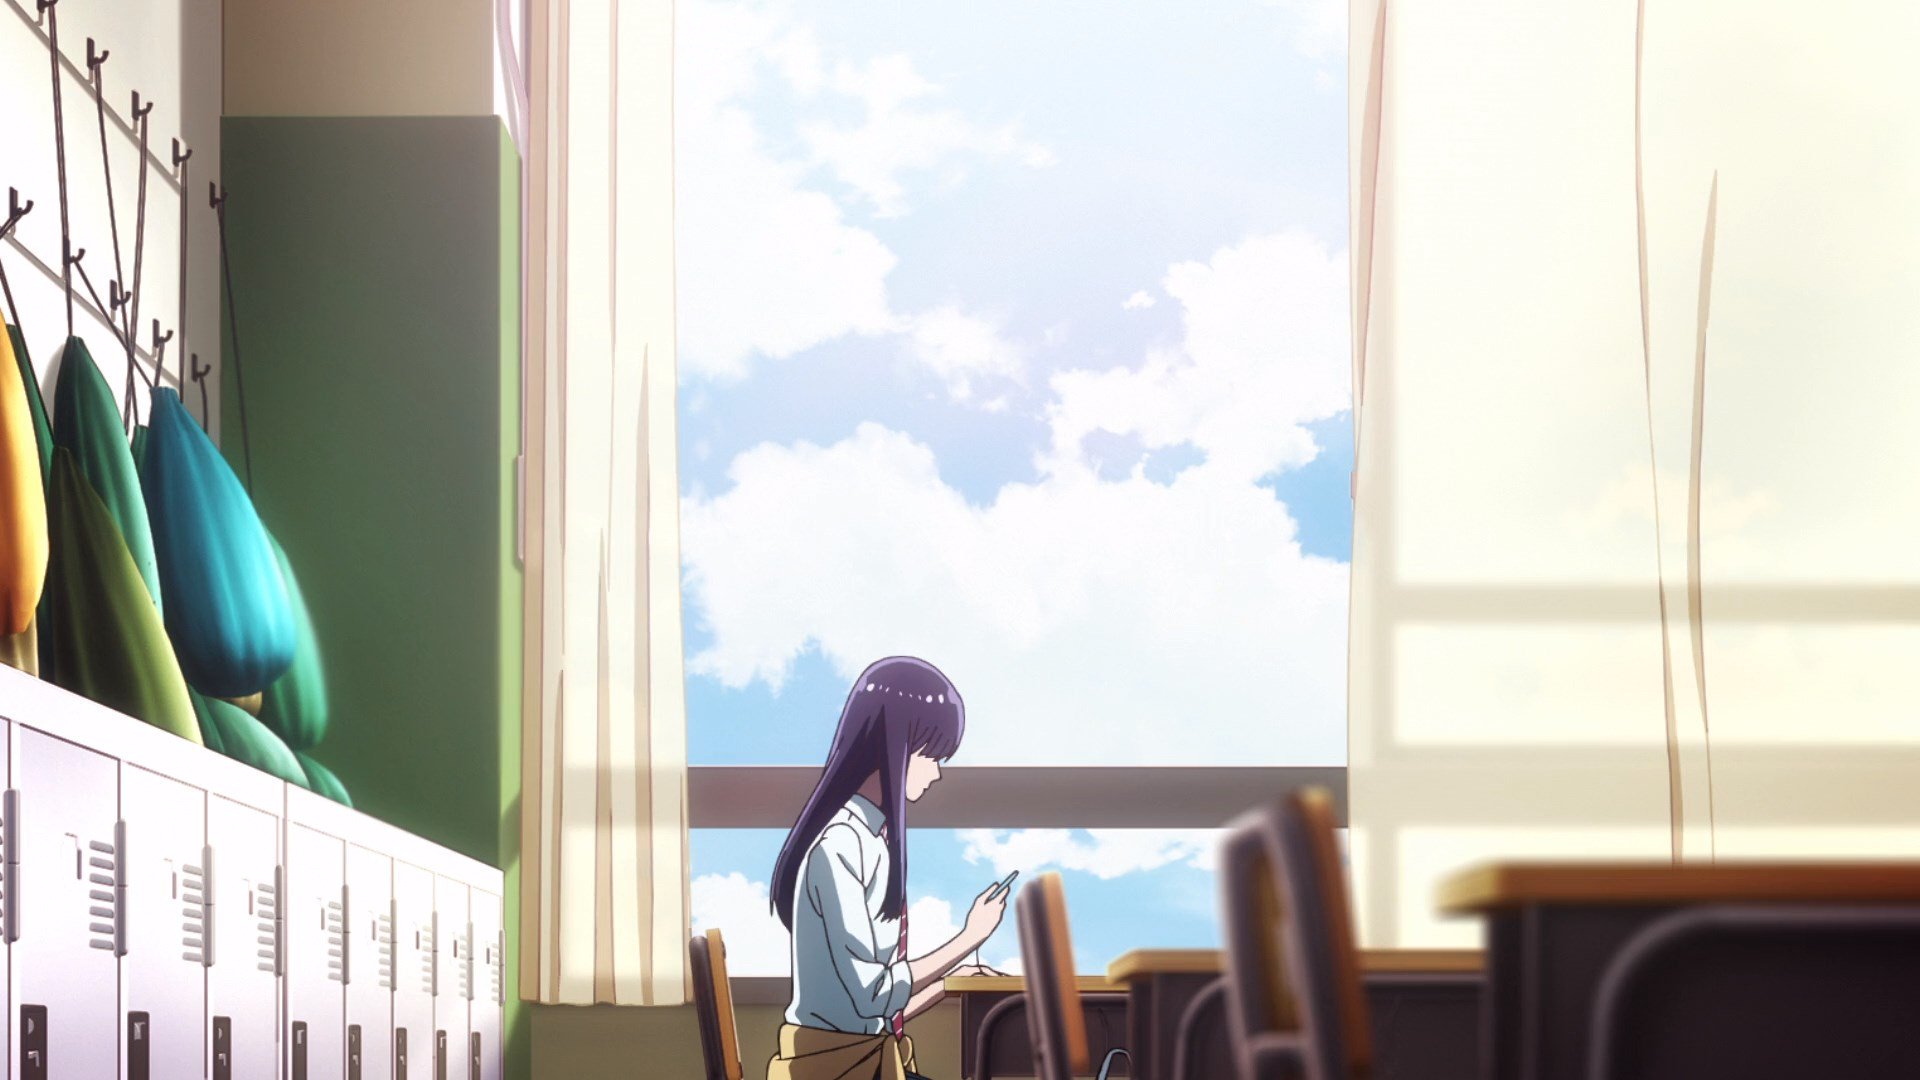 Anime 1920x1080 After the rain anime anime girls purple hair women indoors school long hair window sitting